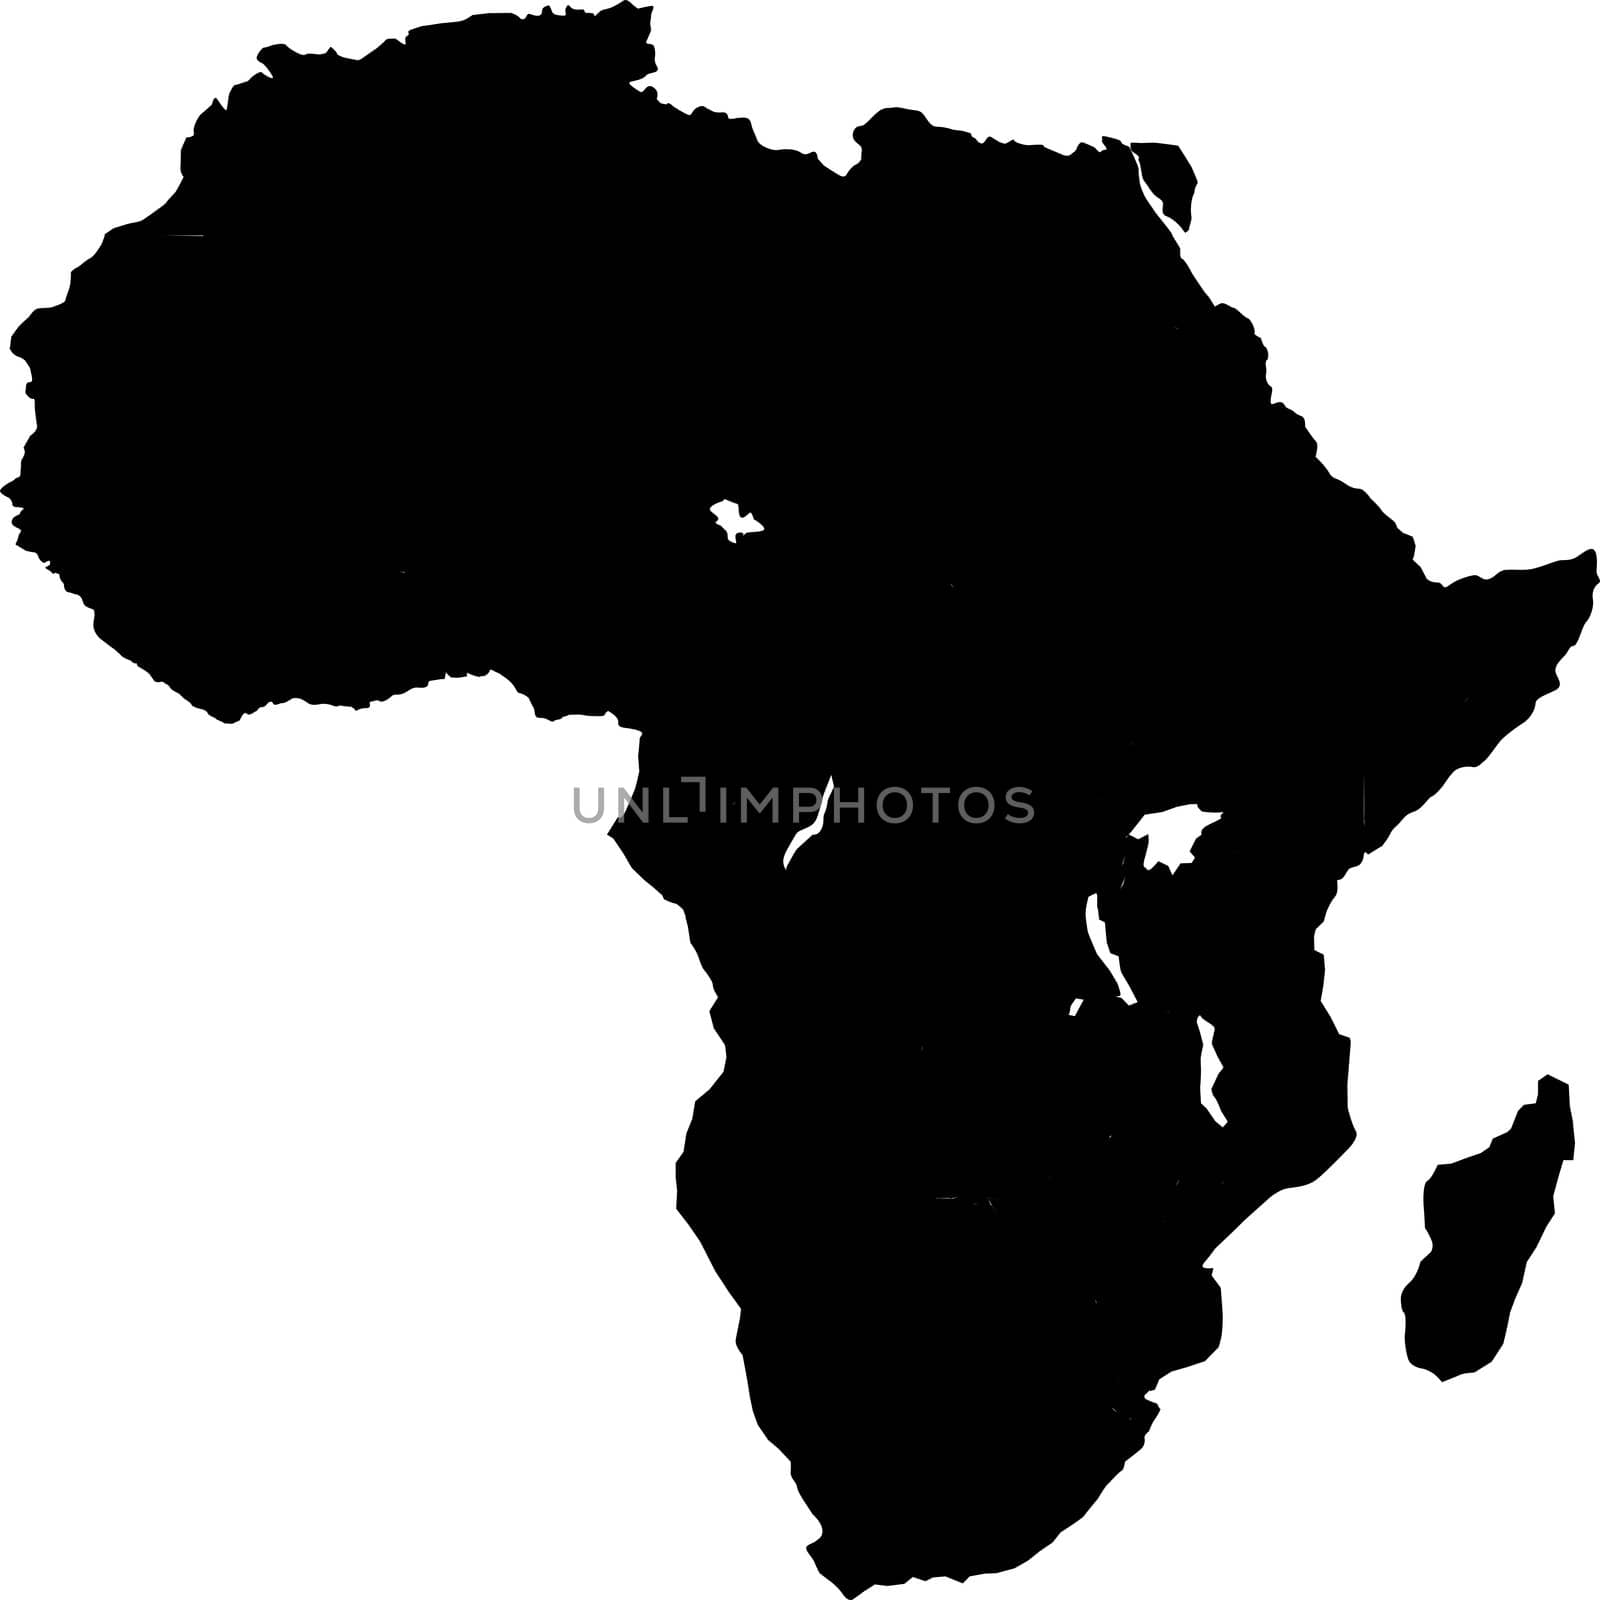 Africa Map black